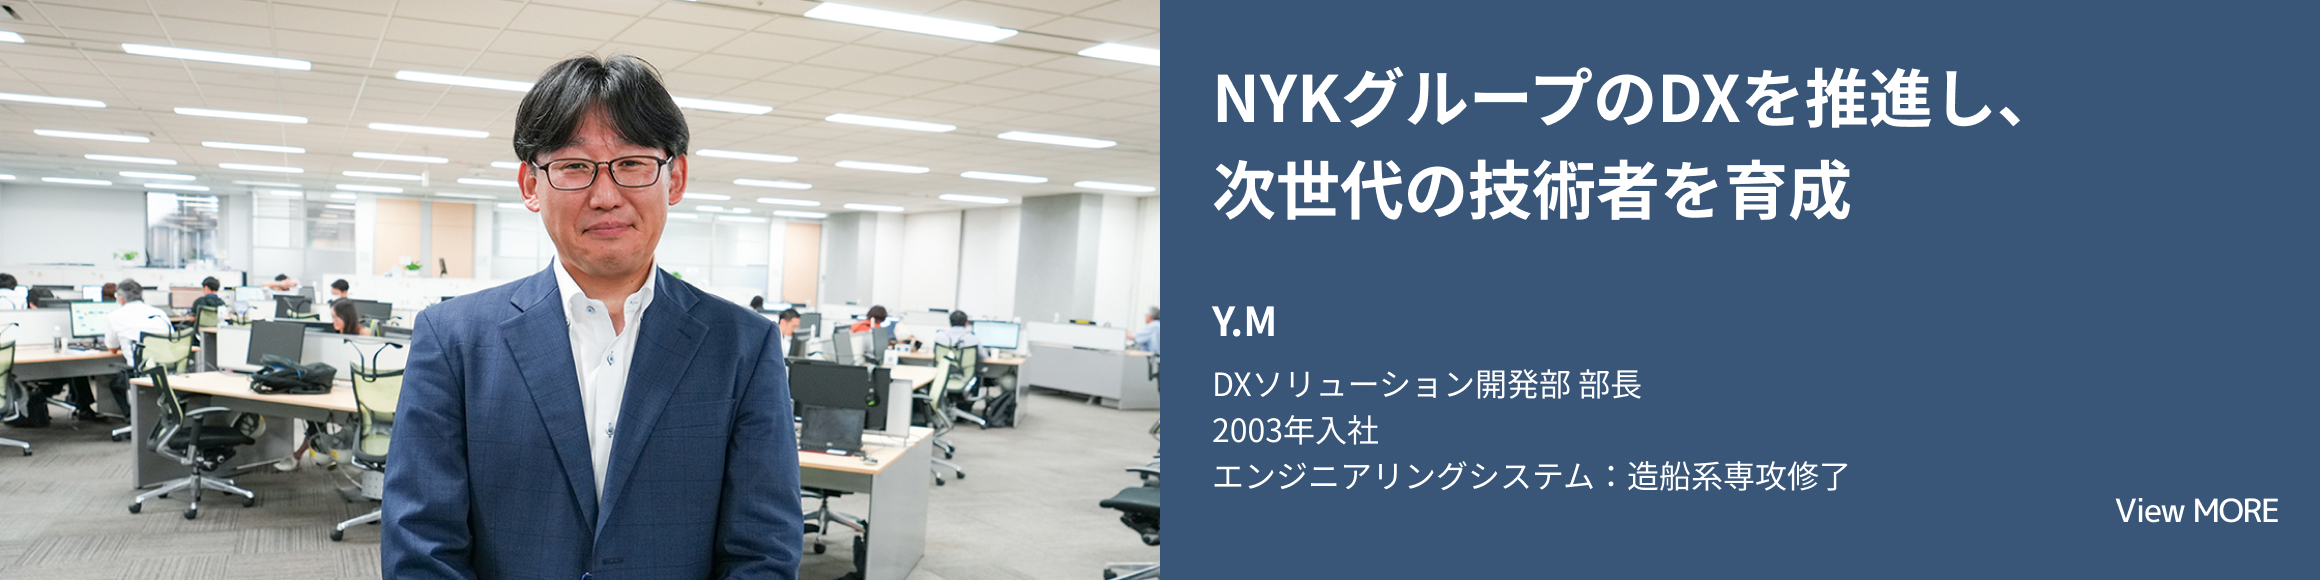 NYKグループのDXを推進し、次世代の技術者を育成